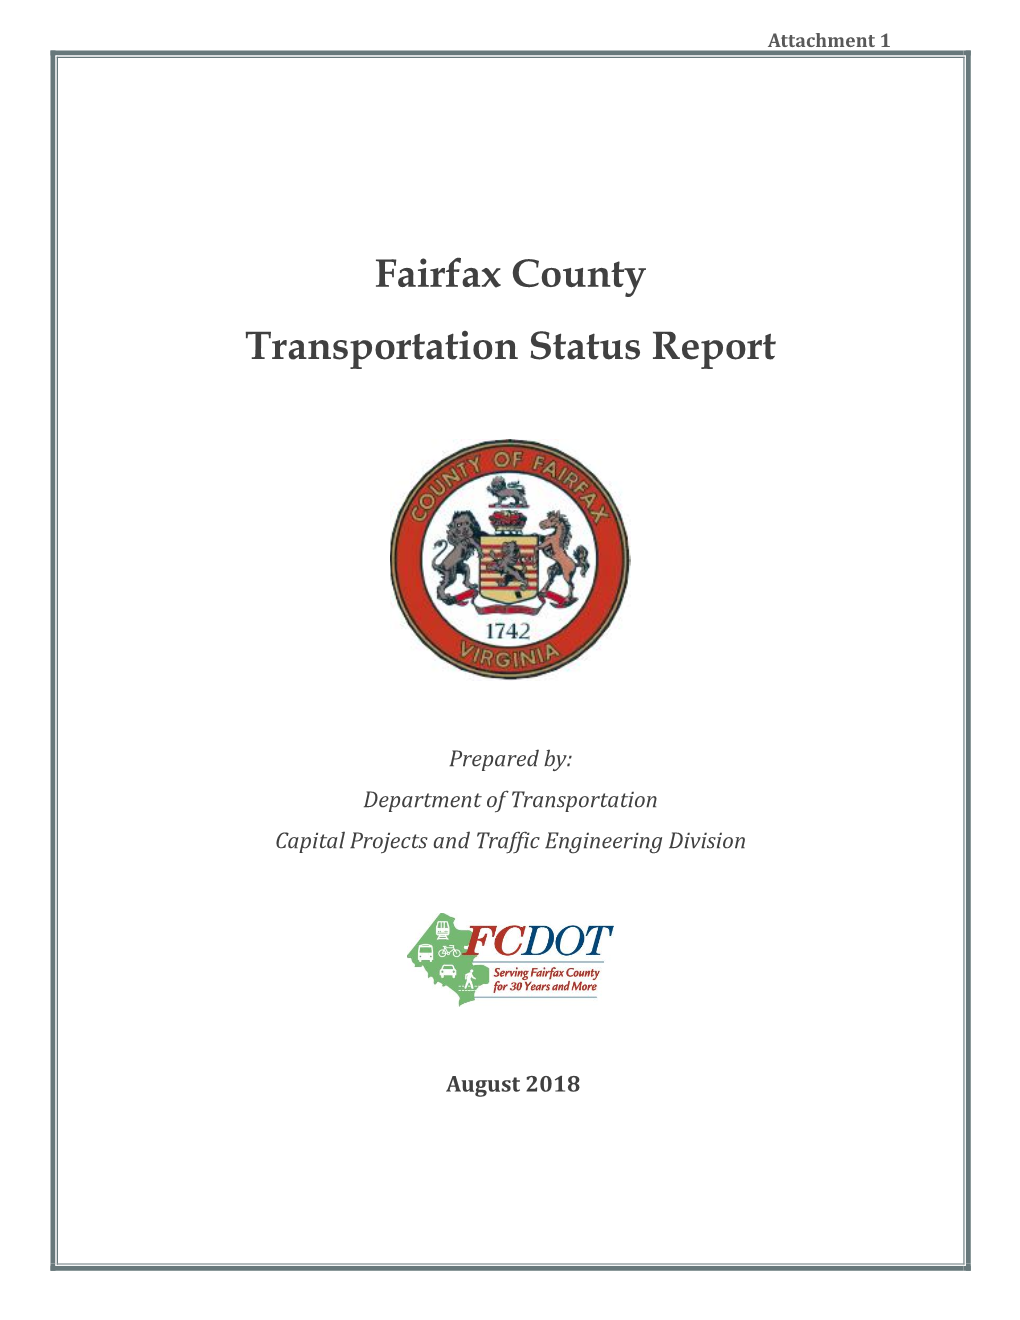 Fairfax County Transportation Status Report